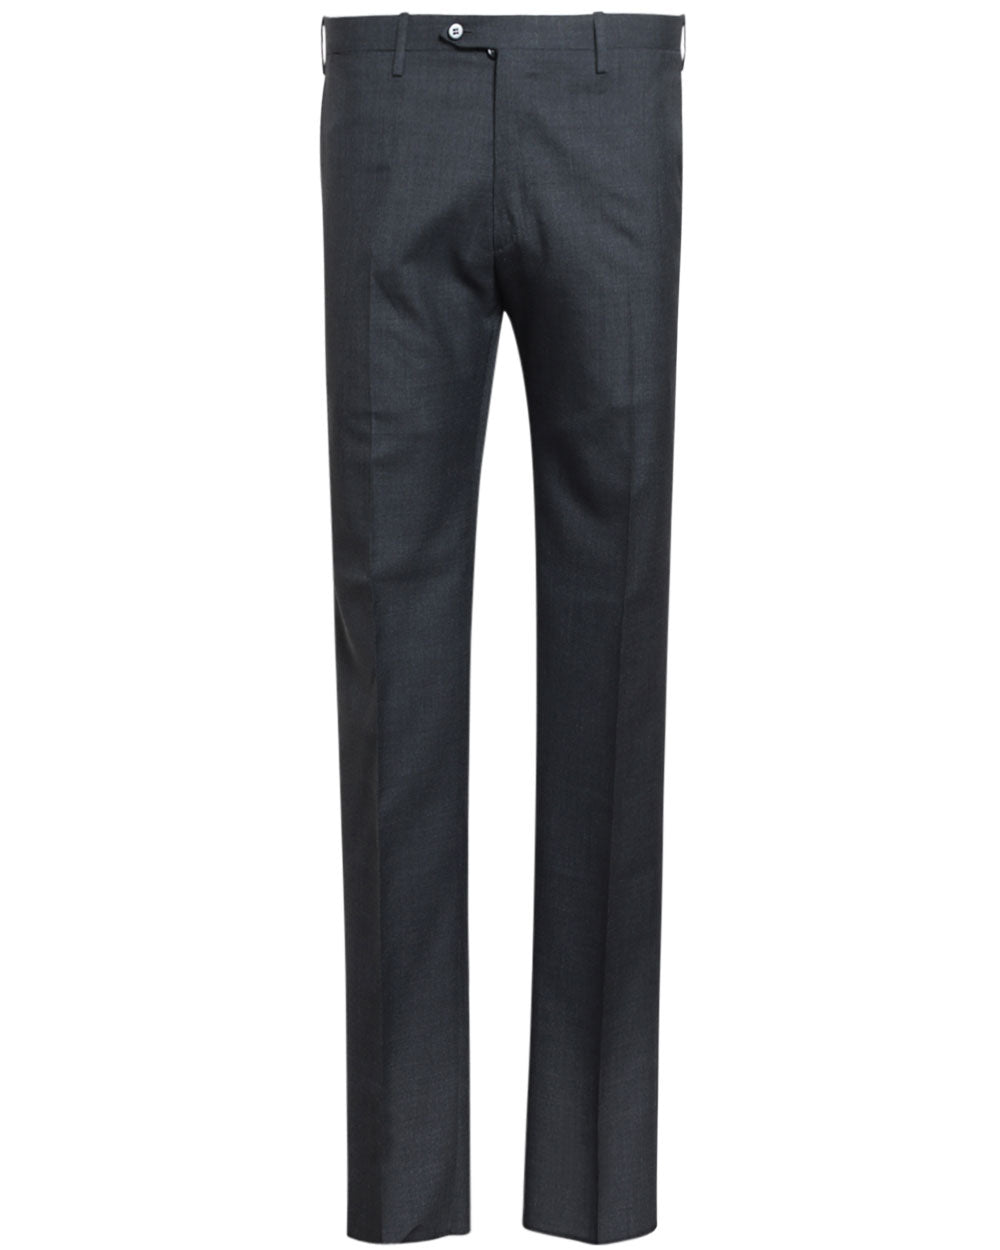 Buy Cantabil Men Dark Grey Formal Trousers online